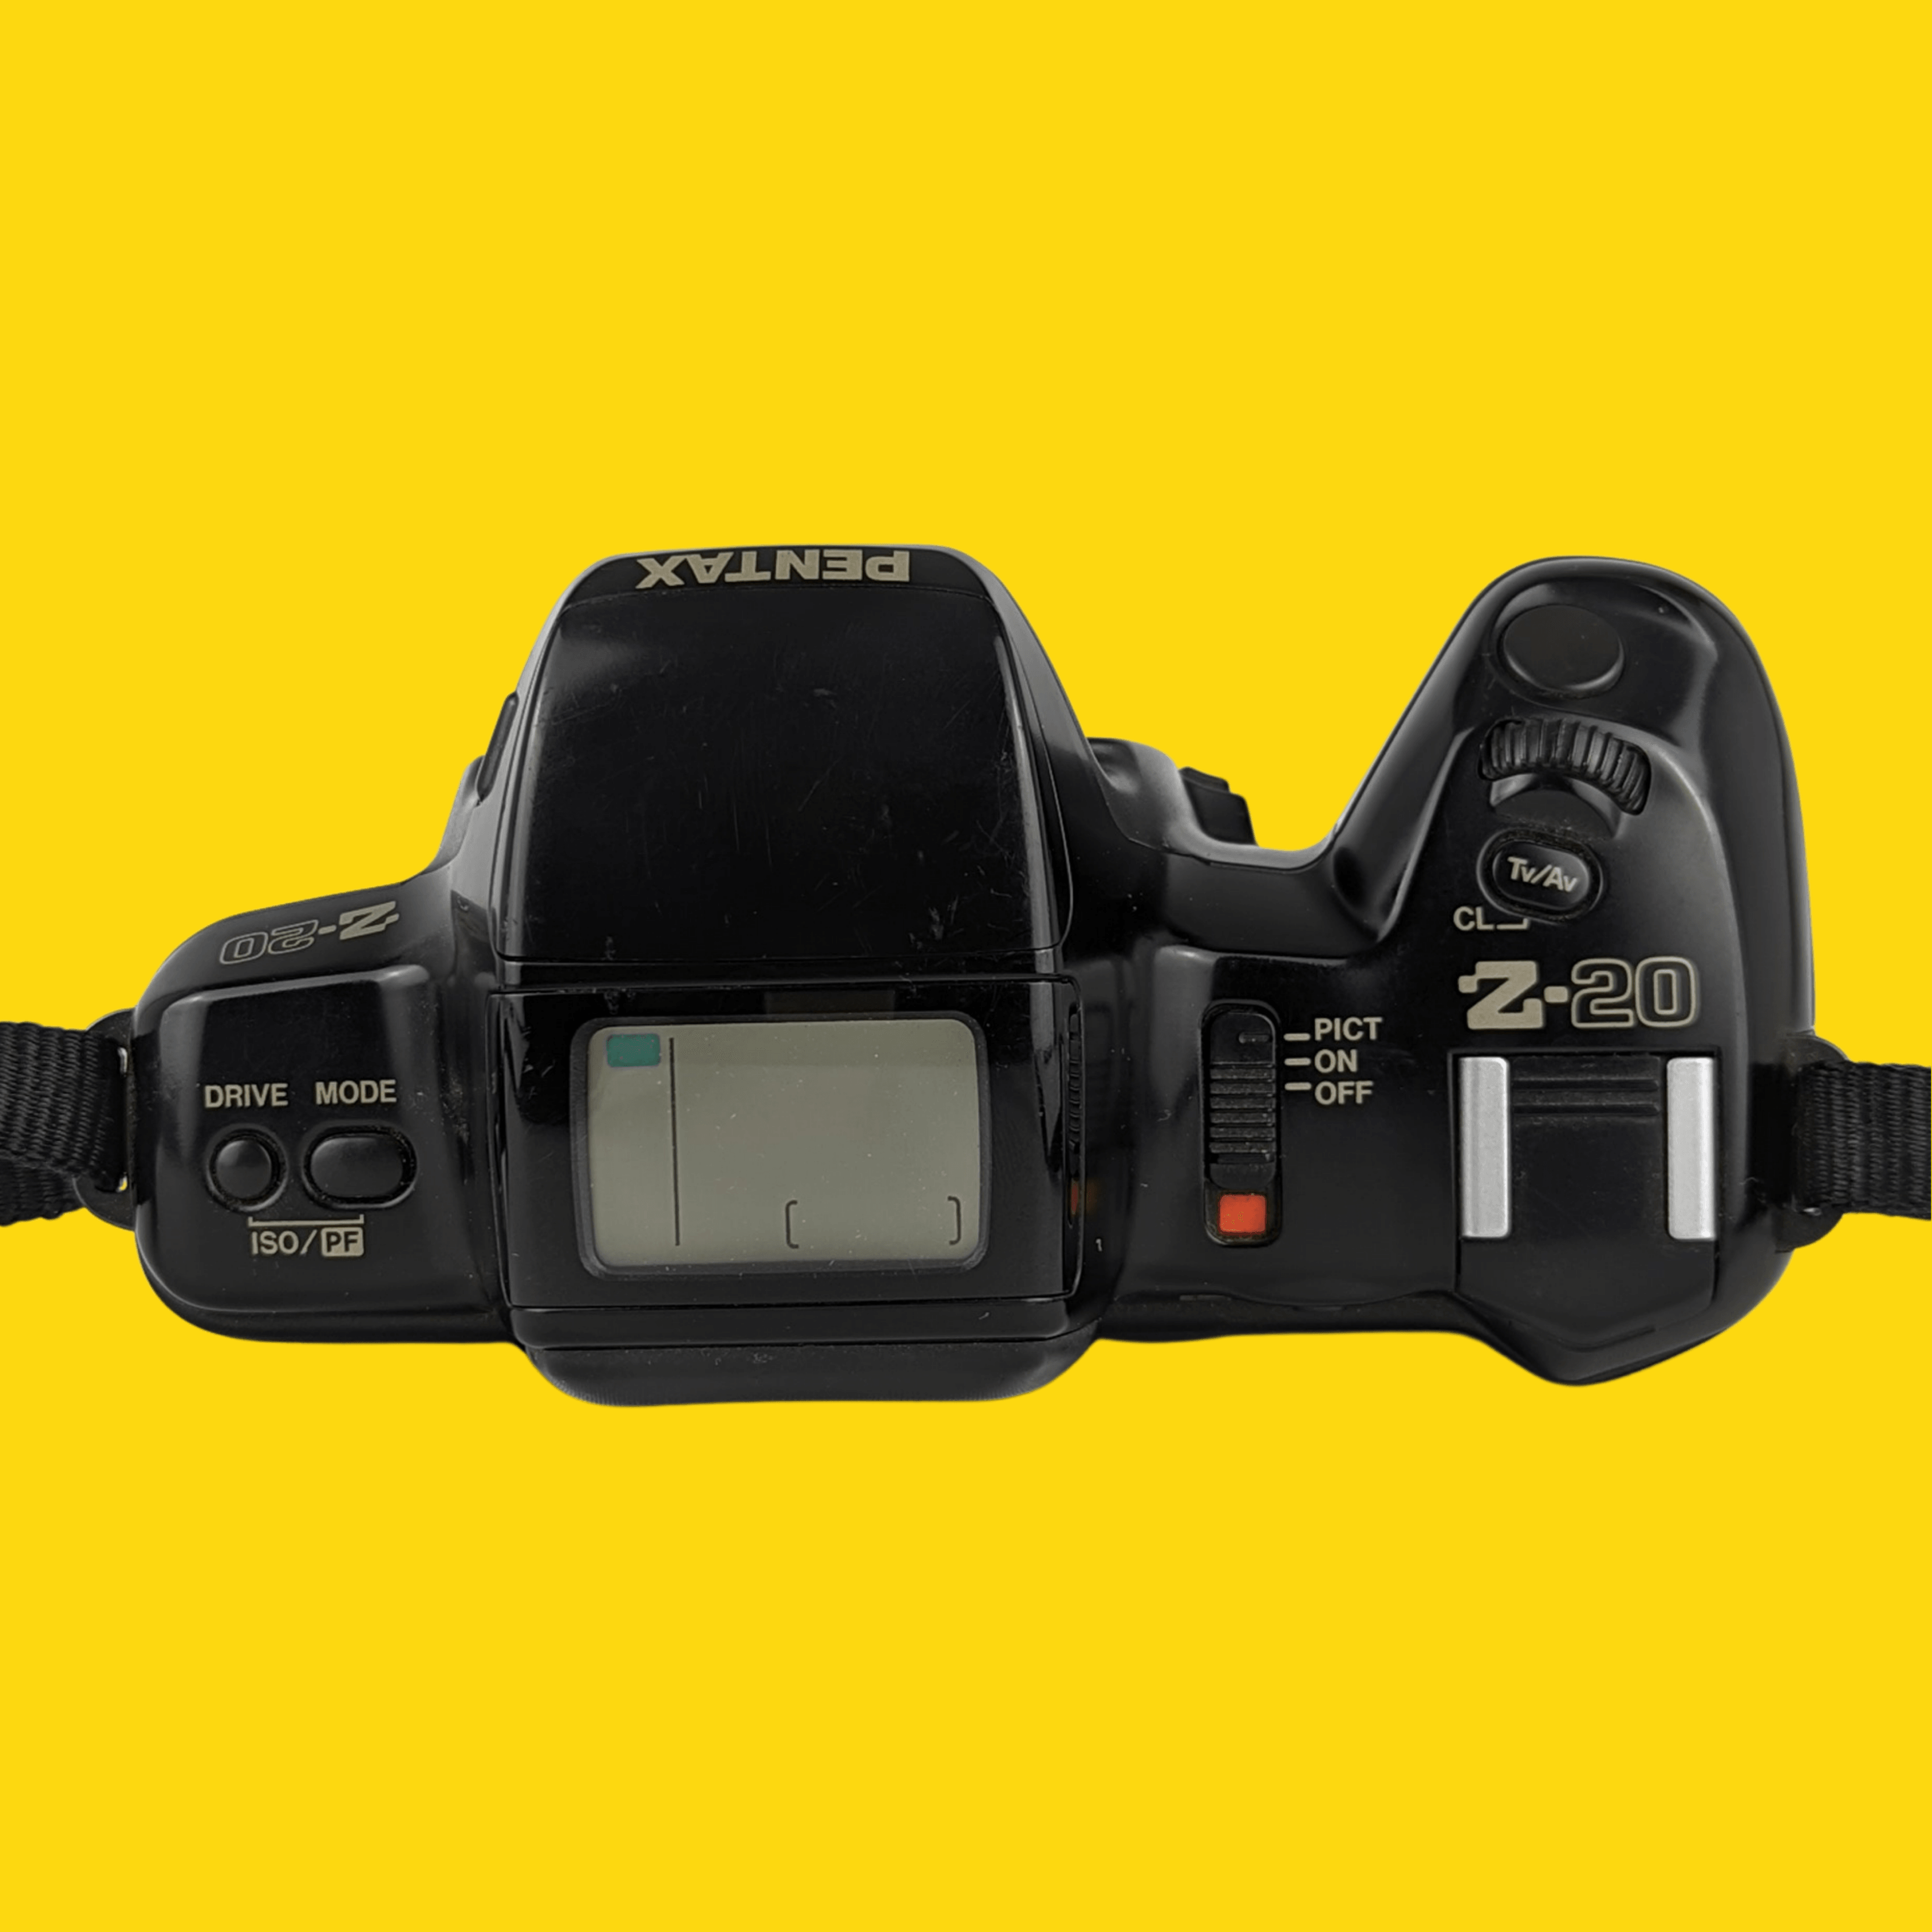 Pentax Z-20 35mm SLR フィルム カメラ - 本体のみ